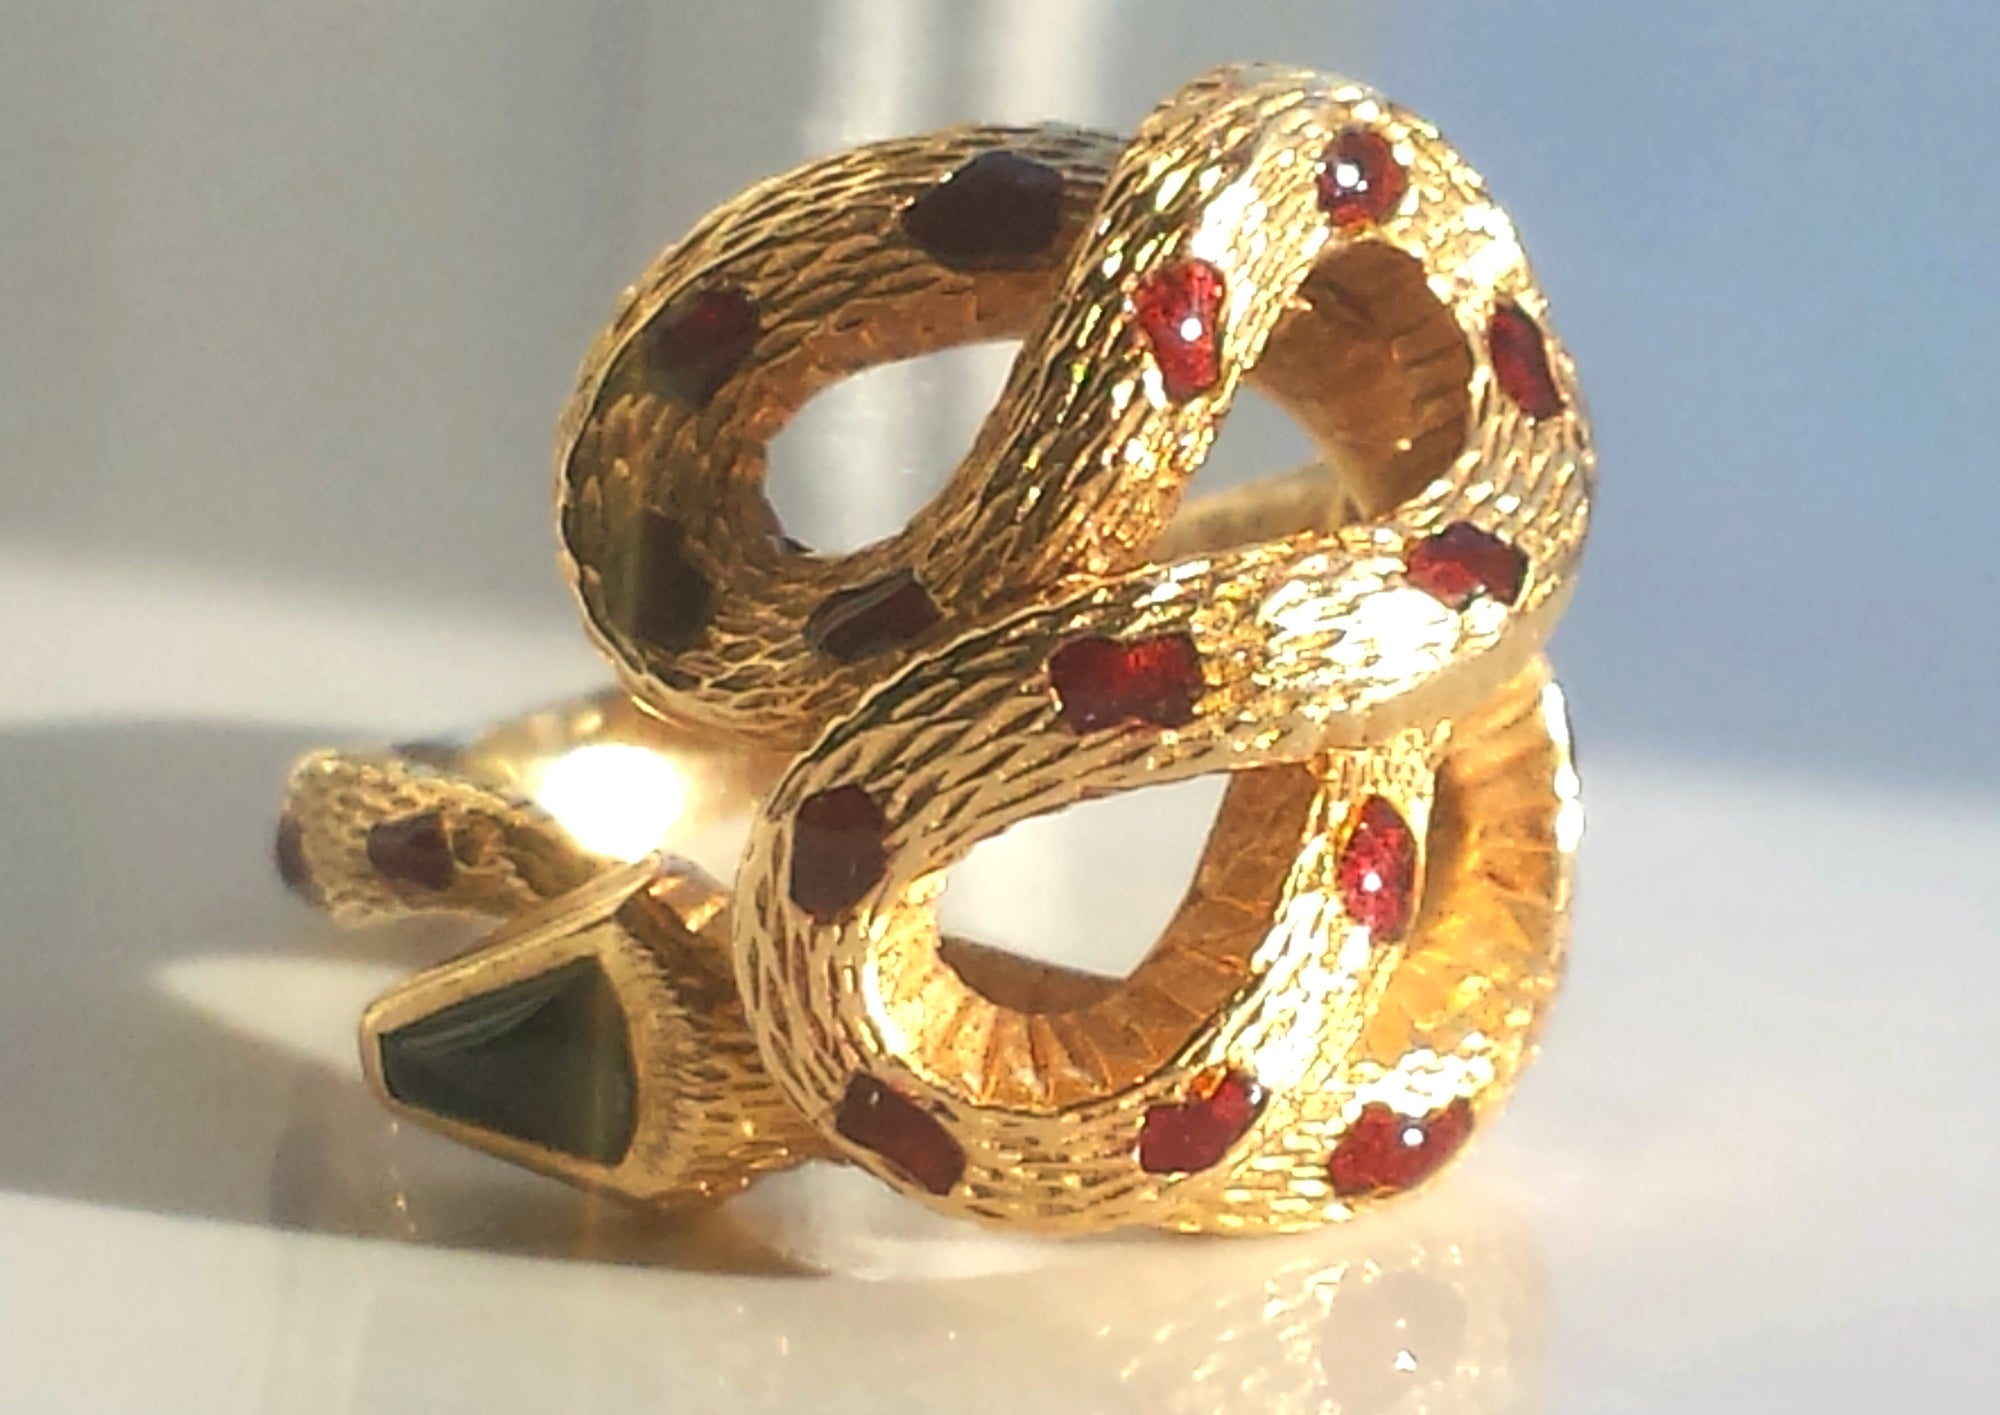 Cartier Rare Vintage 1970s Snake / Serpent Ring 18K Yellow Gold, Onyx & Enamel